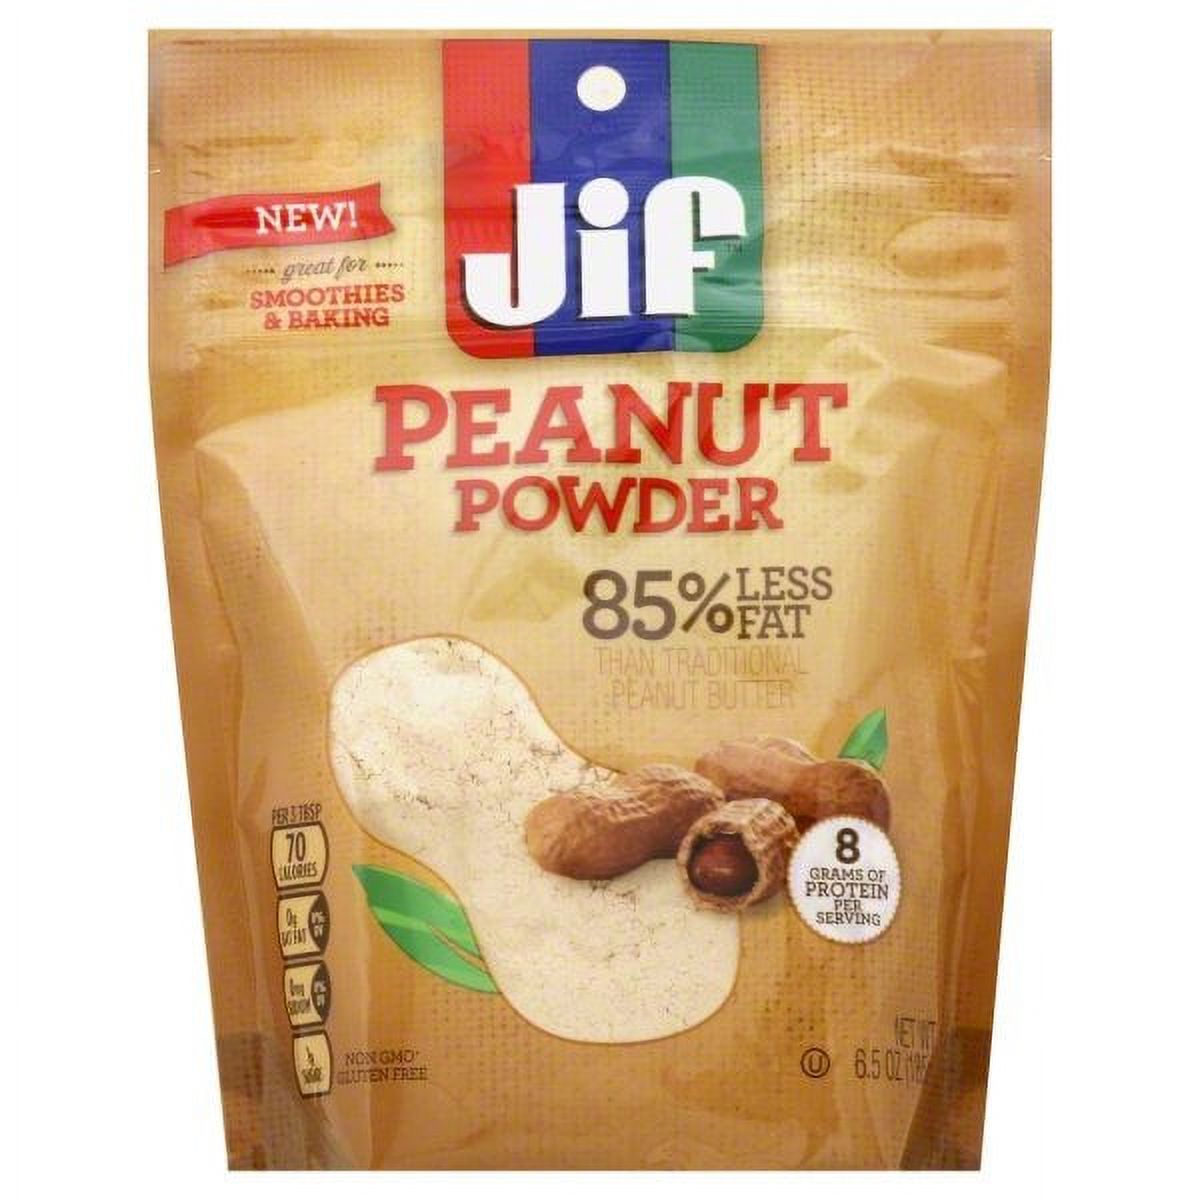 Jif Peanut Powder, 6.5-Ounce - image 1 of 3